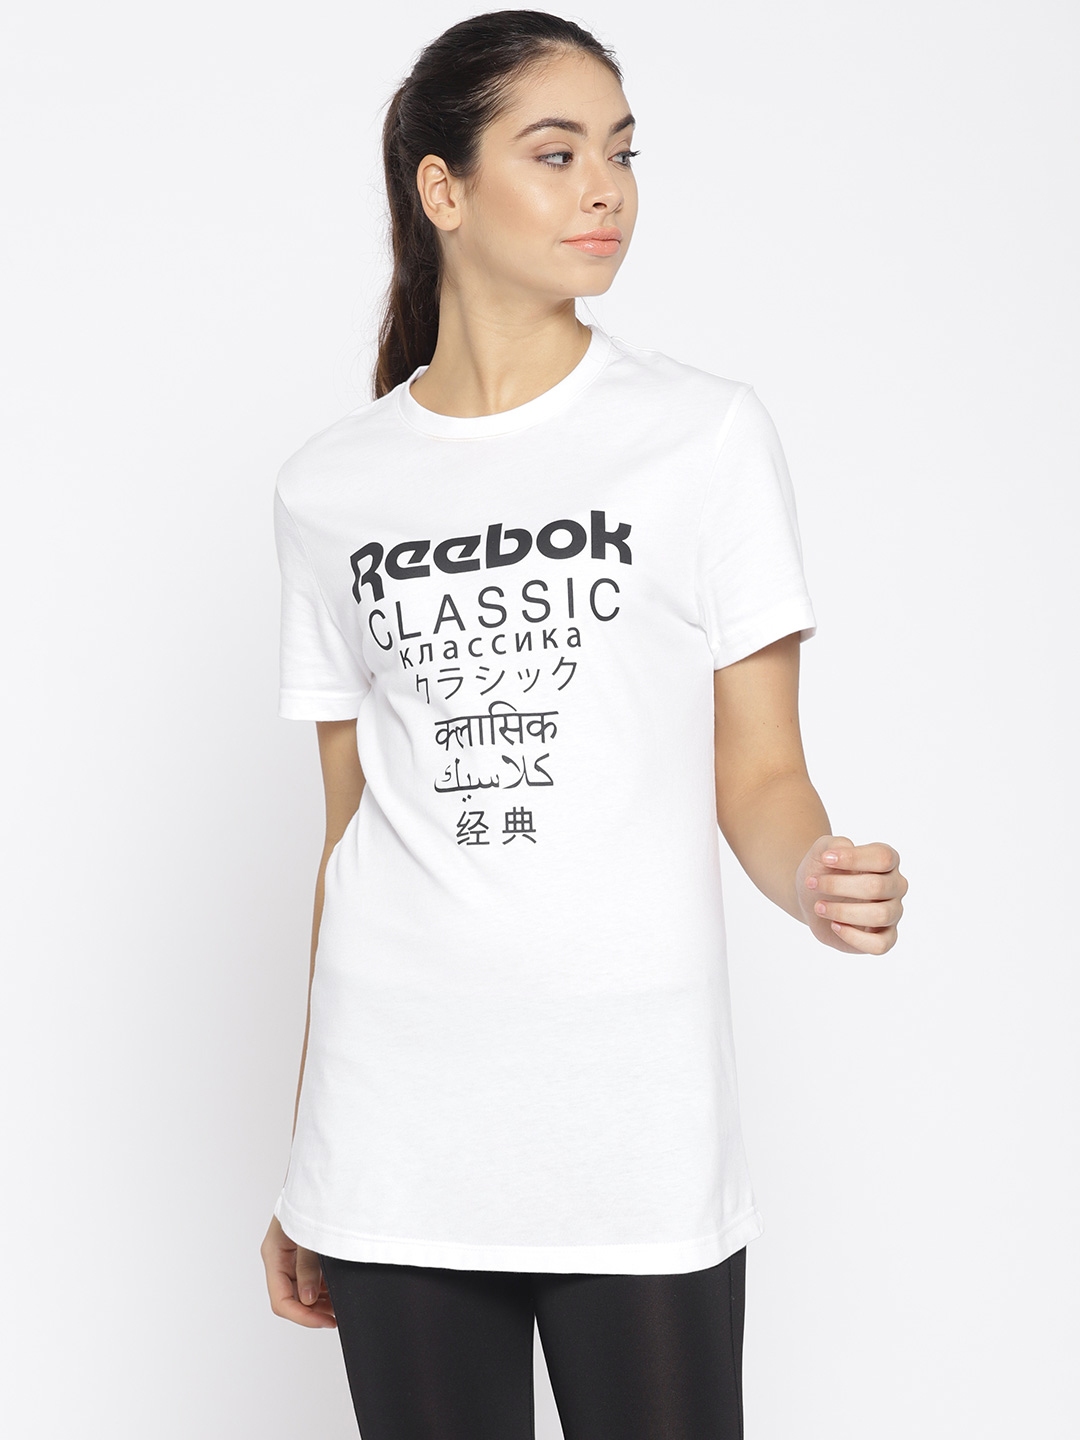 reebok classic white shirt - 59% OFF 